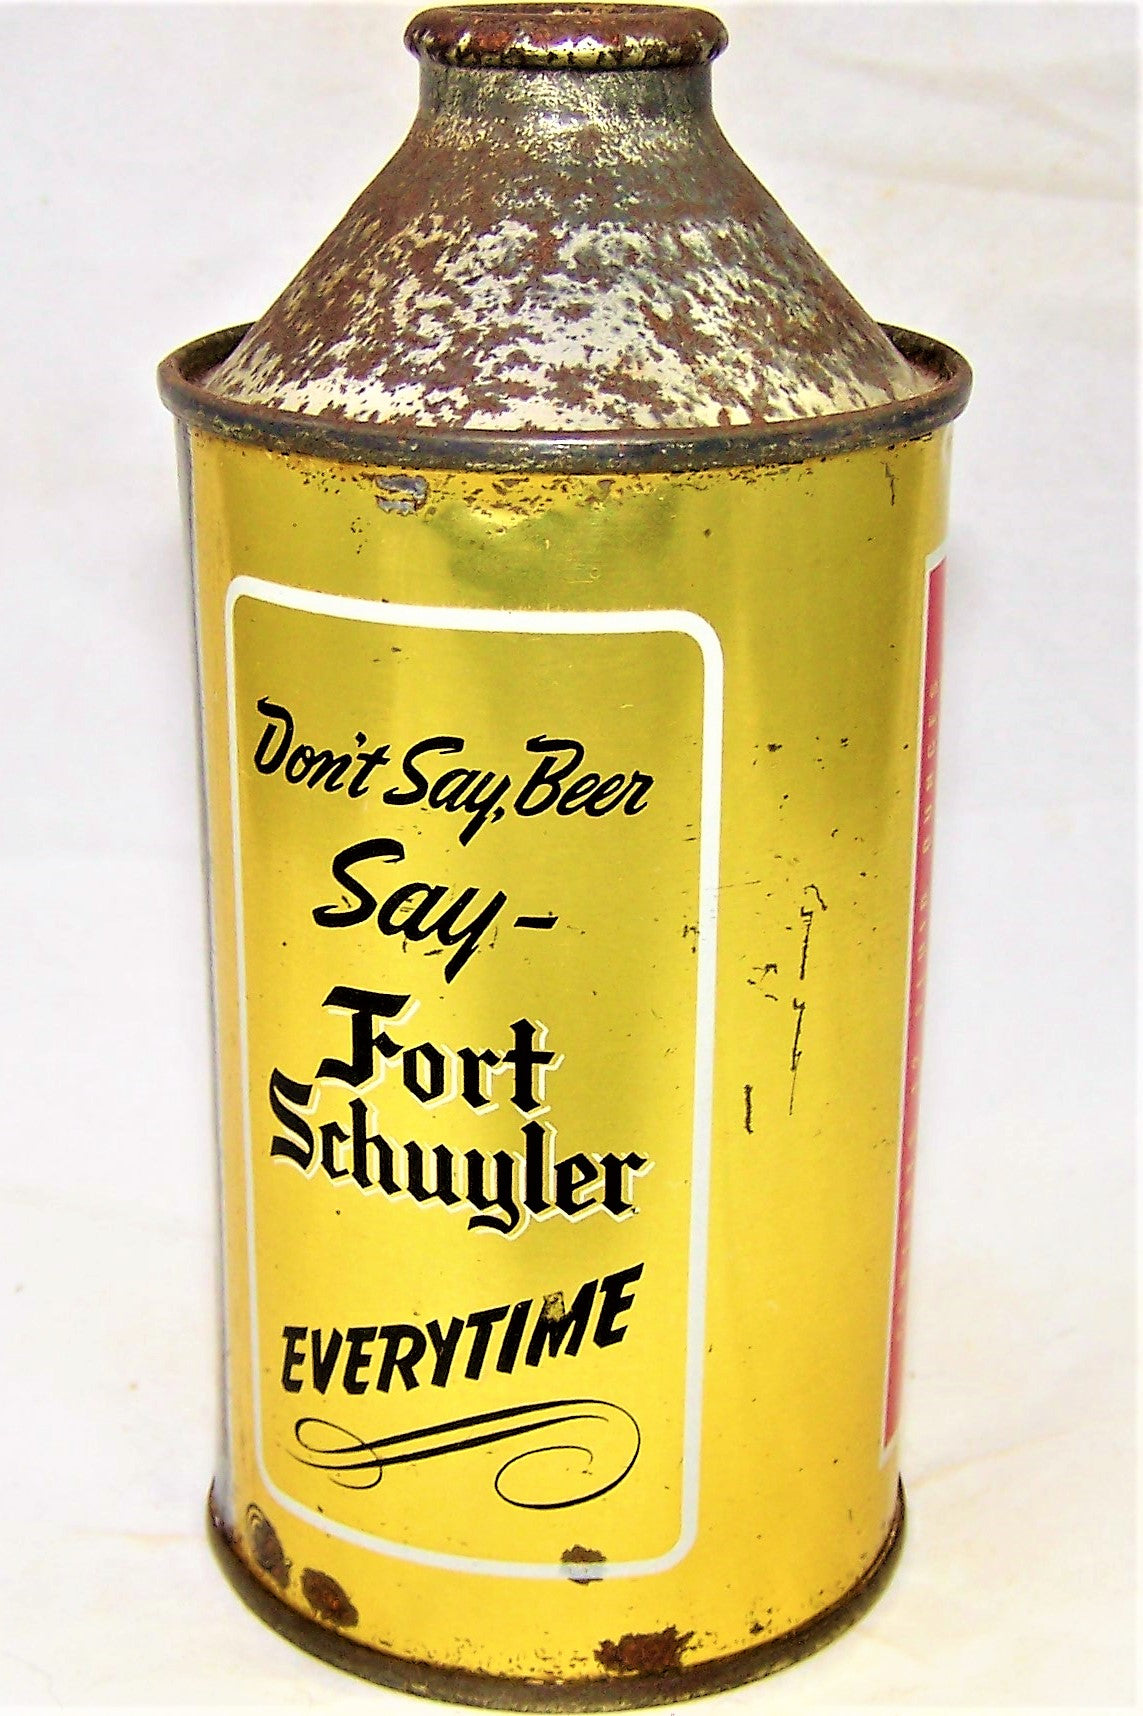 Fort Schuyler Lager Beer, USBC 163-18, Grade 1-